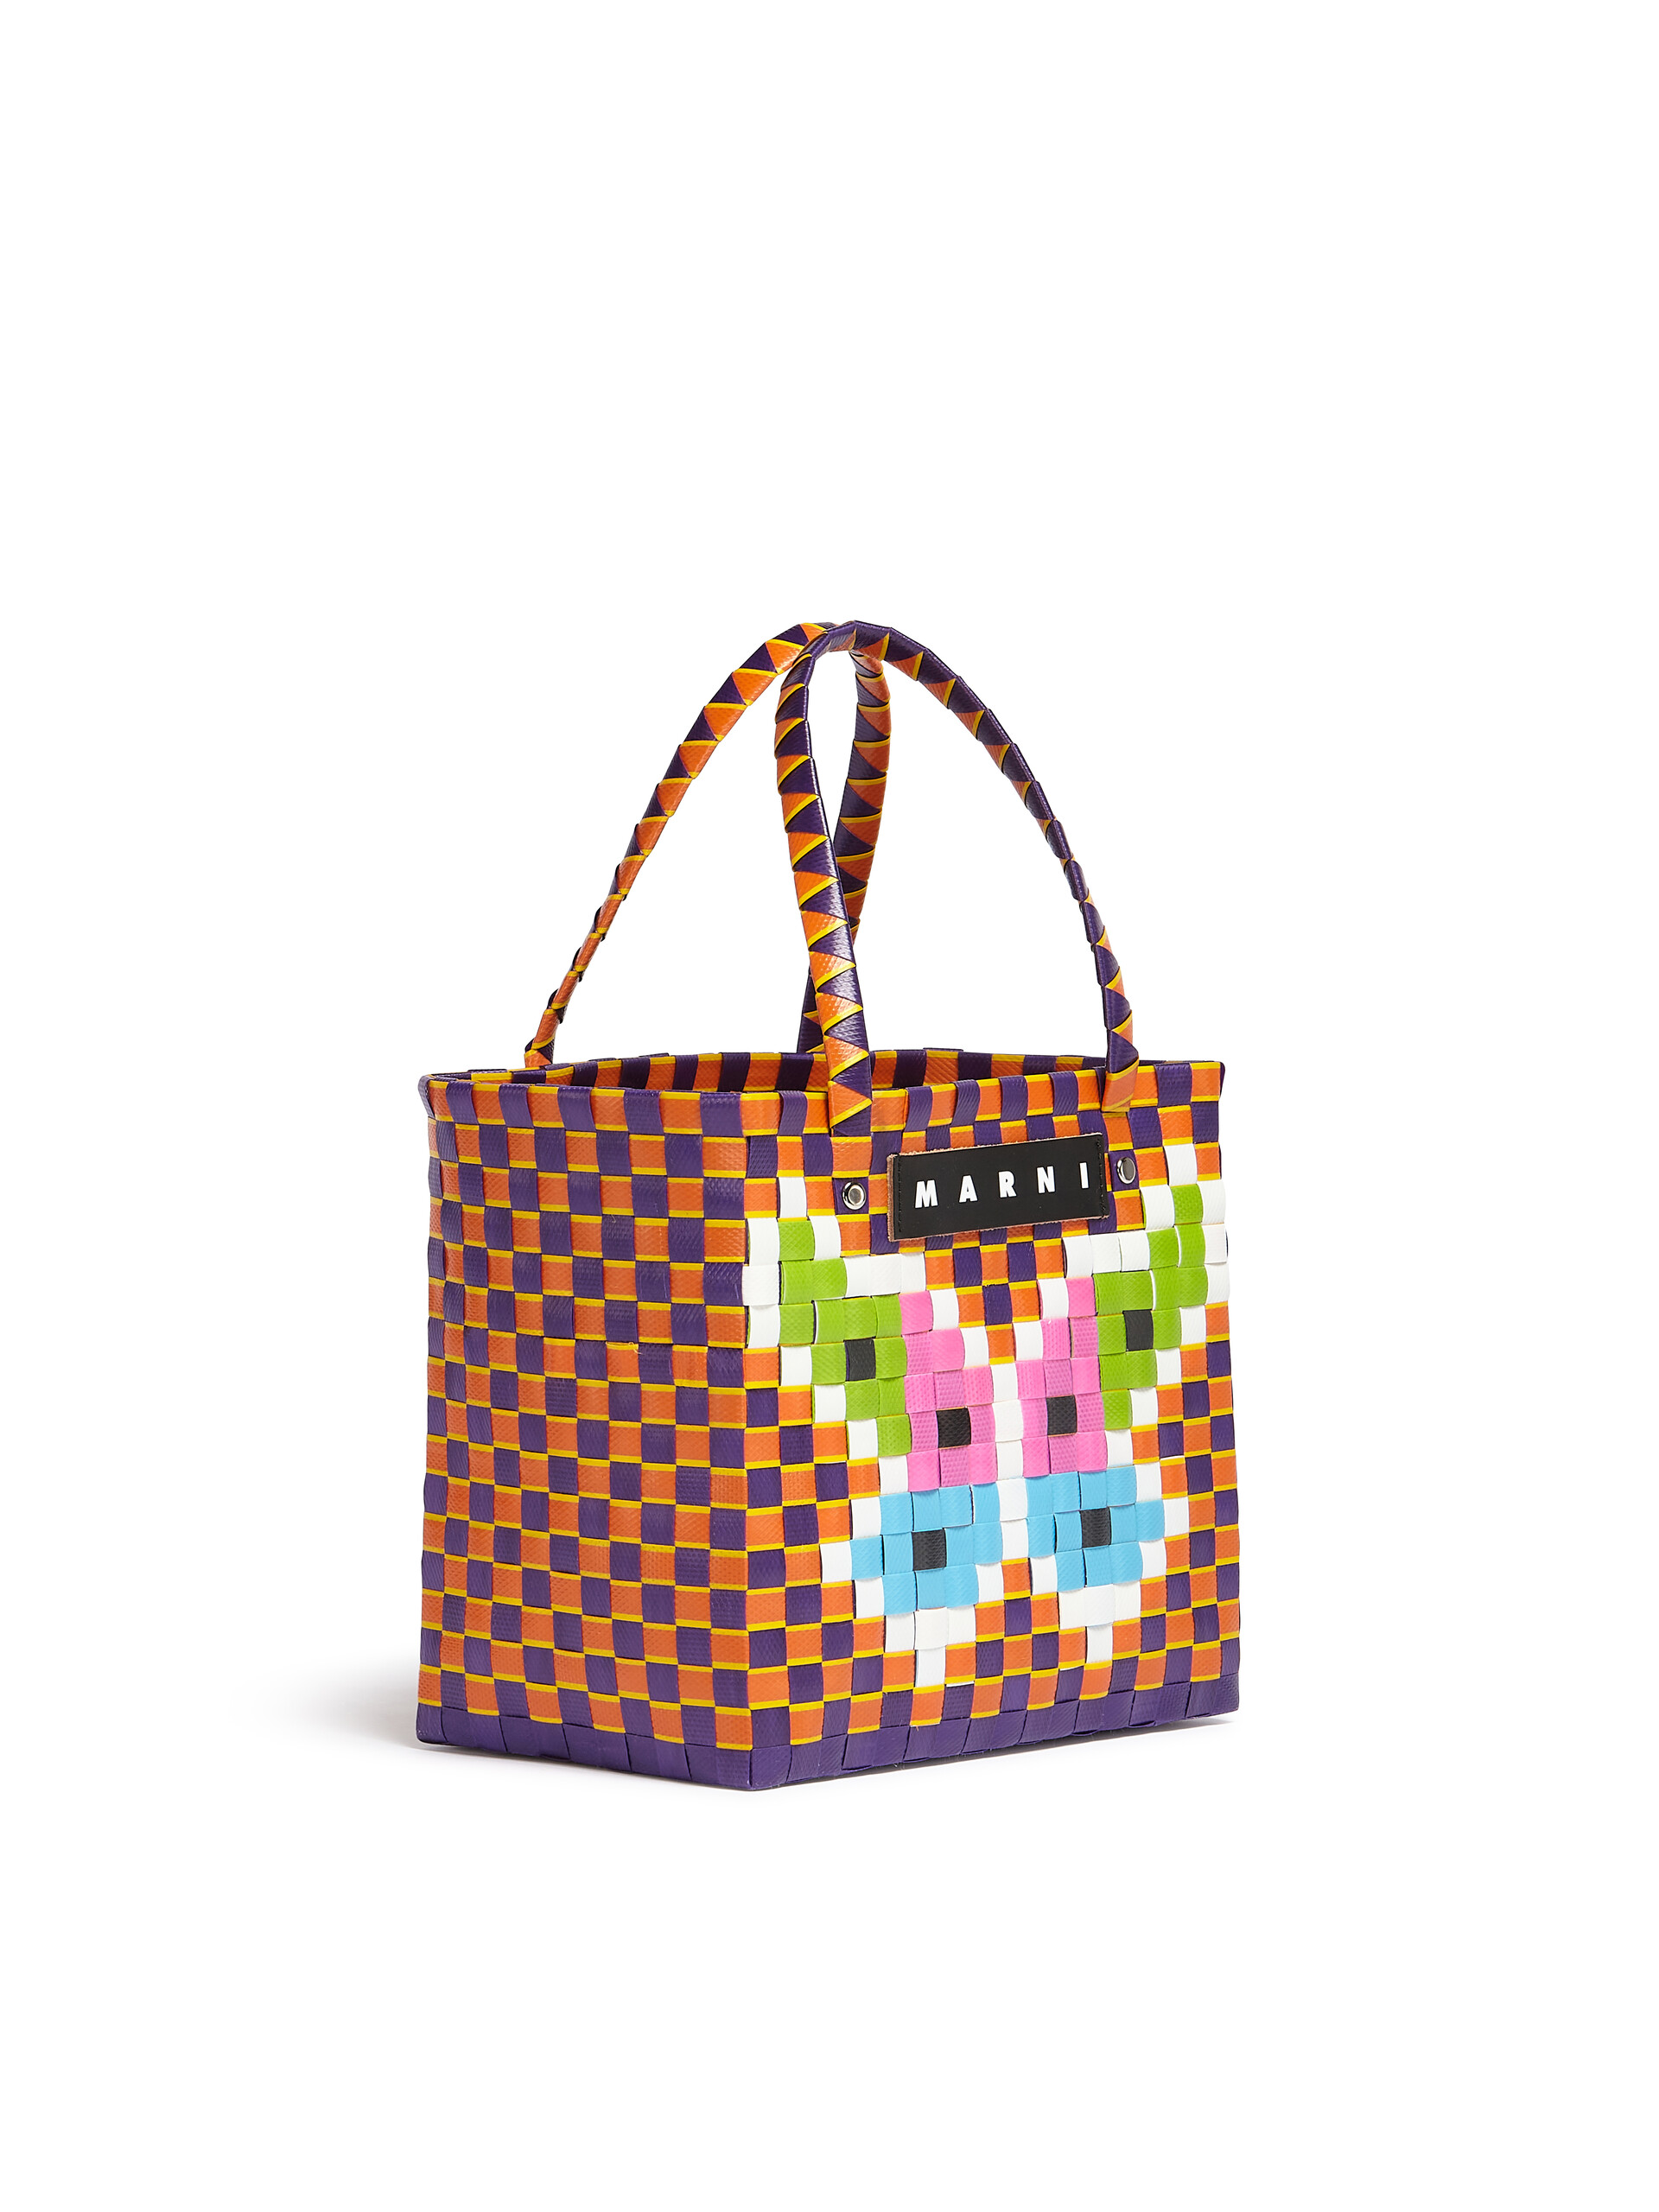 MARNI MARKET FLOWER BASKET bag in orange butterfly motif - Bags - Image 2